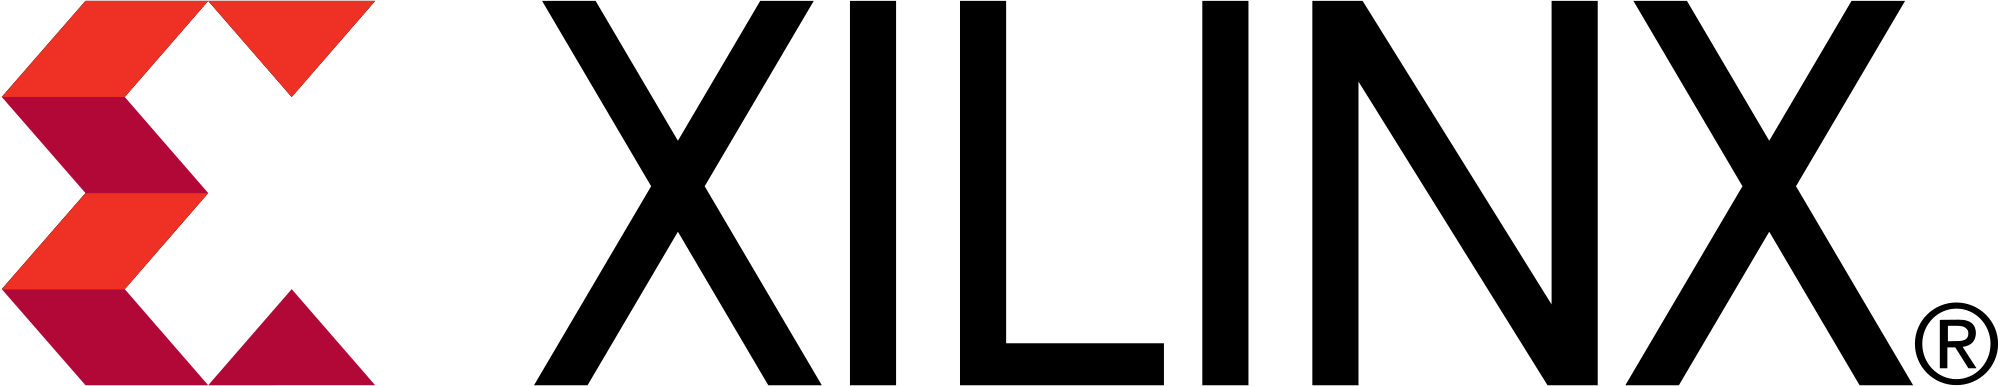 Xilinx Logo - Xilinx logo 2008.svg